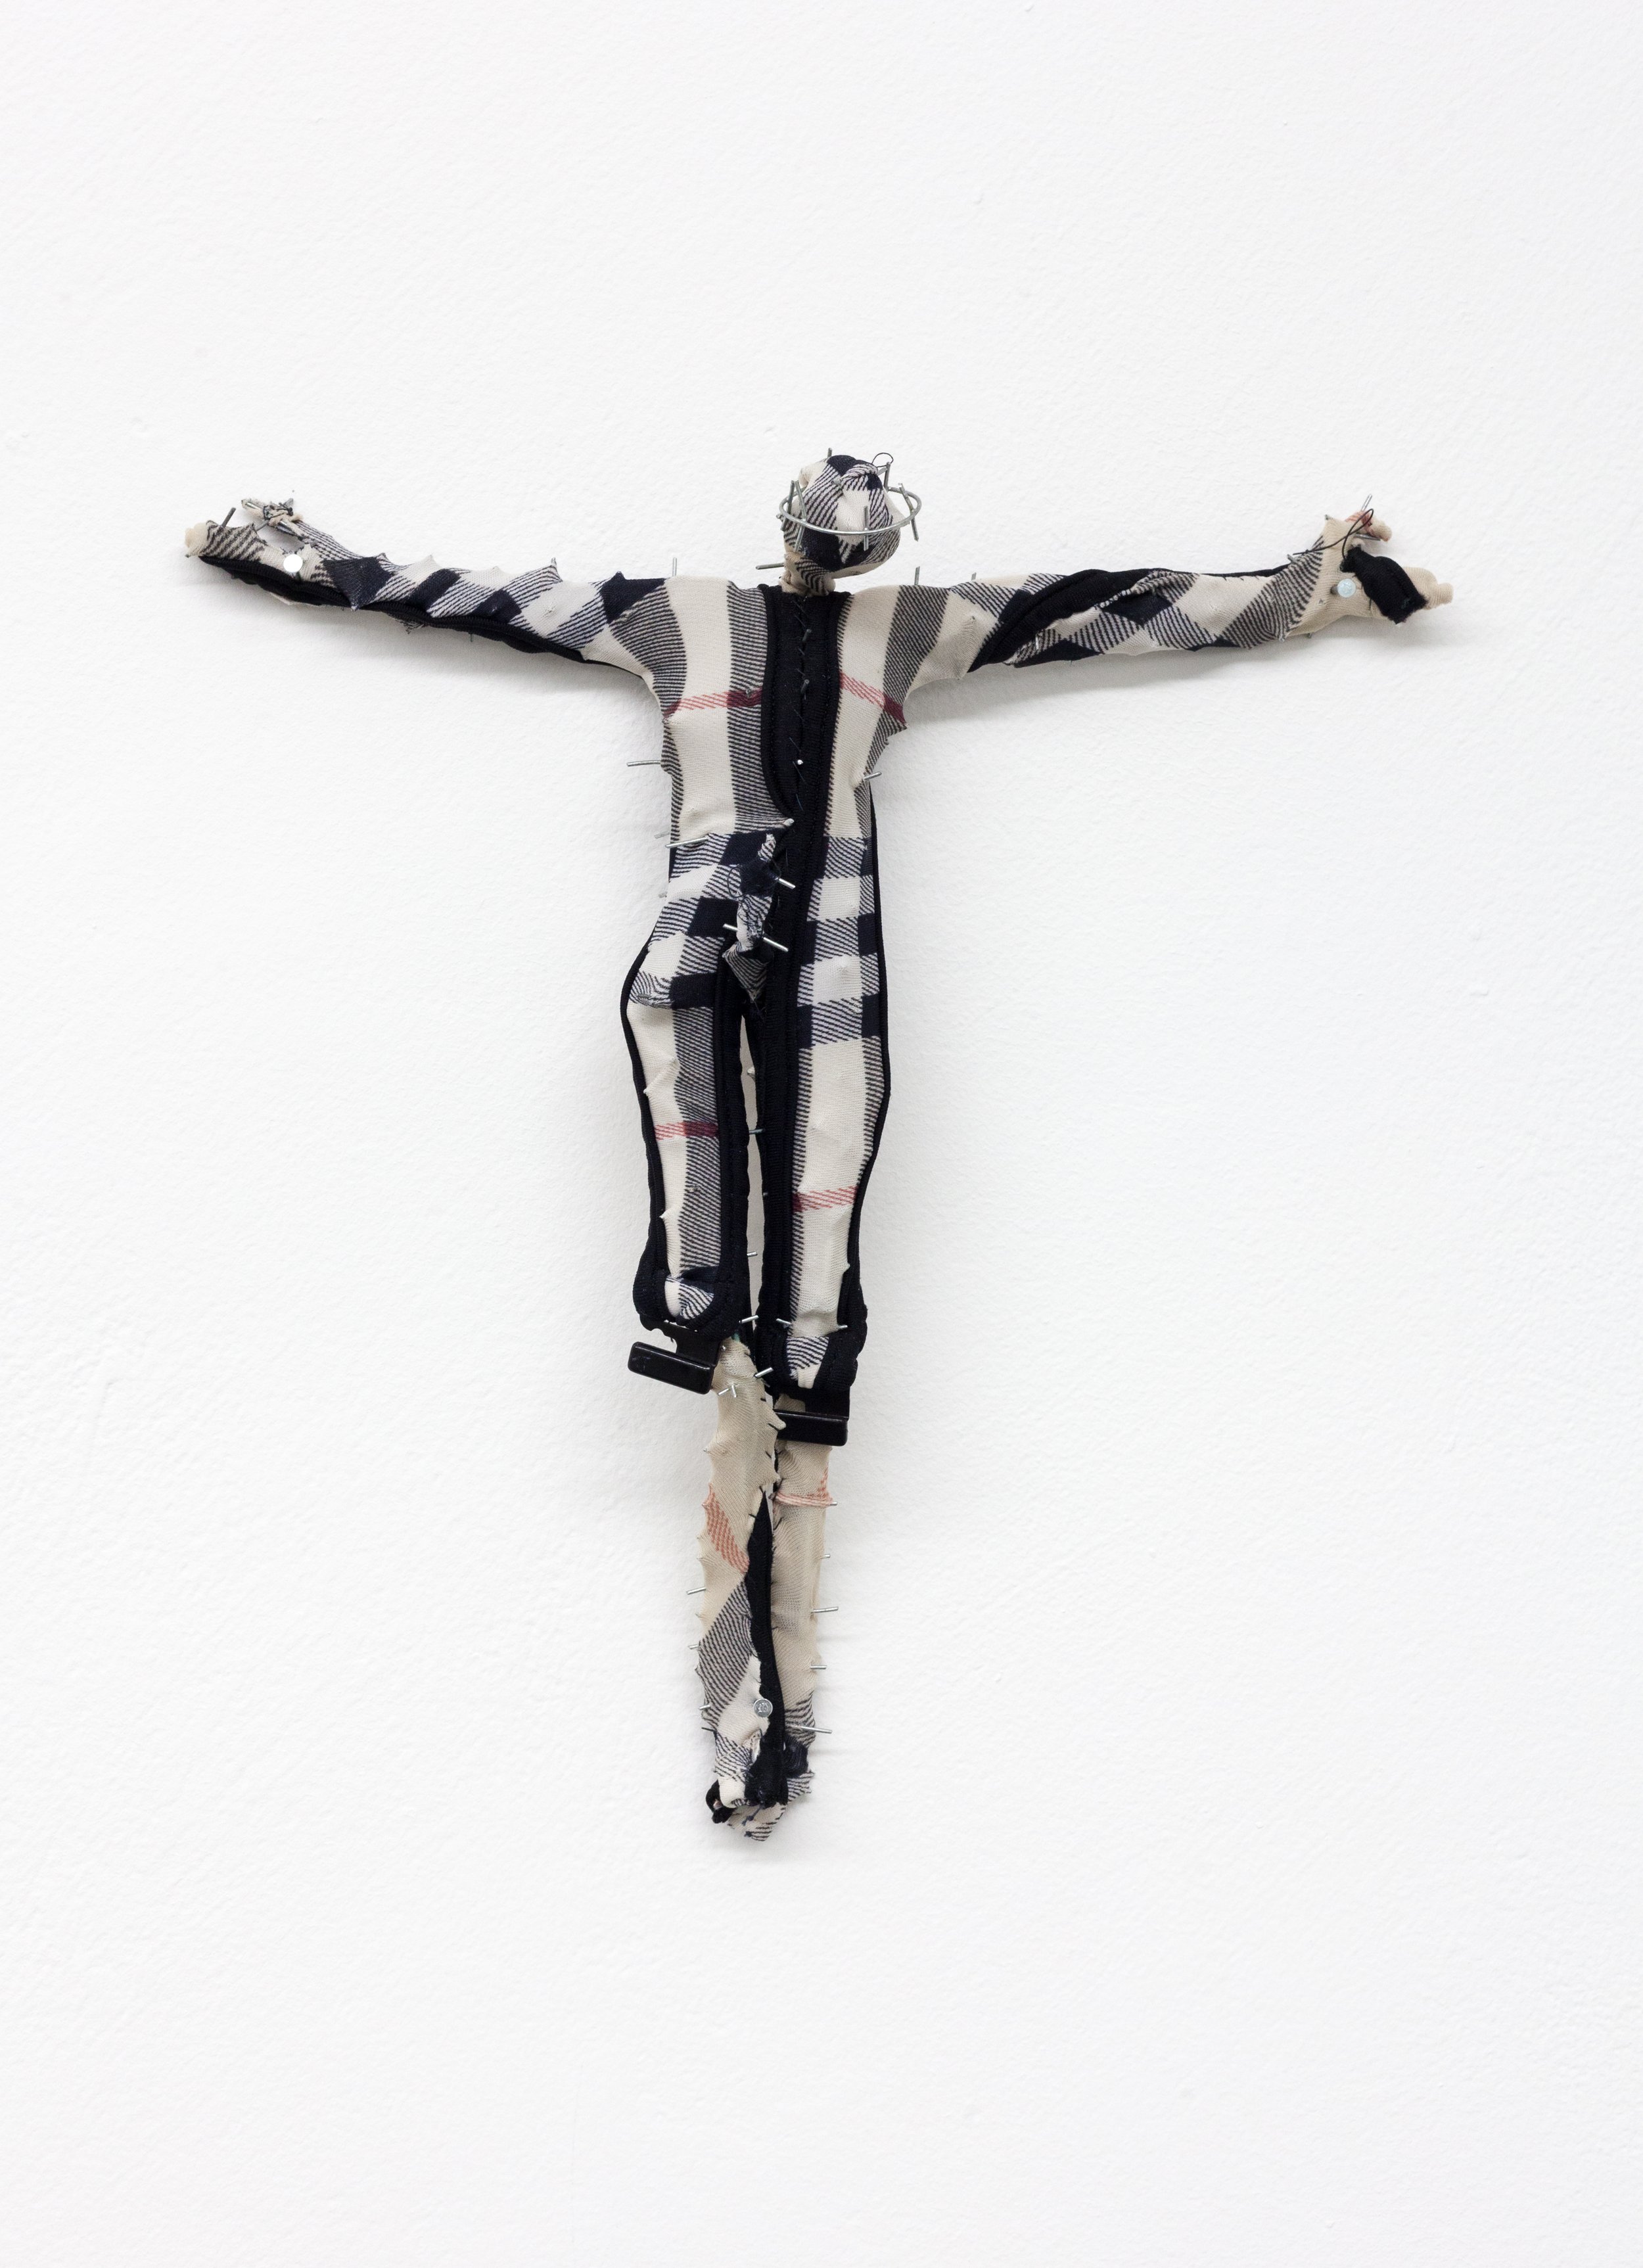   Bikini Crucifixion no. 11 , 2020. Old bathingsuits, steel, cotton thread. 11 x 11 x 2.5 inches. 